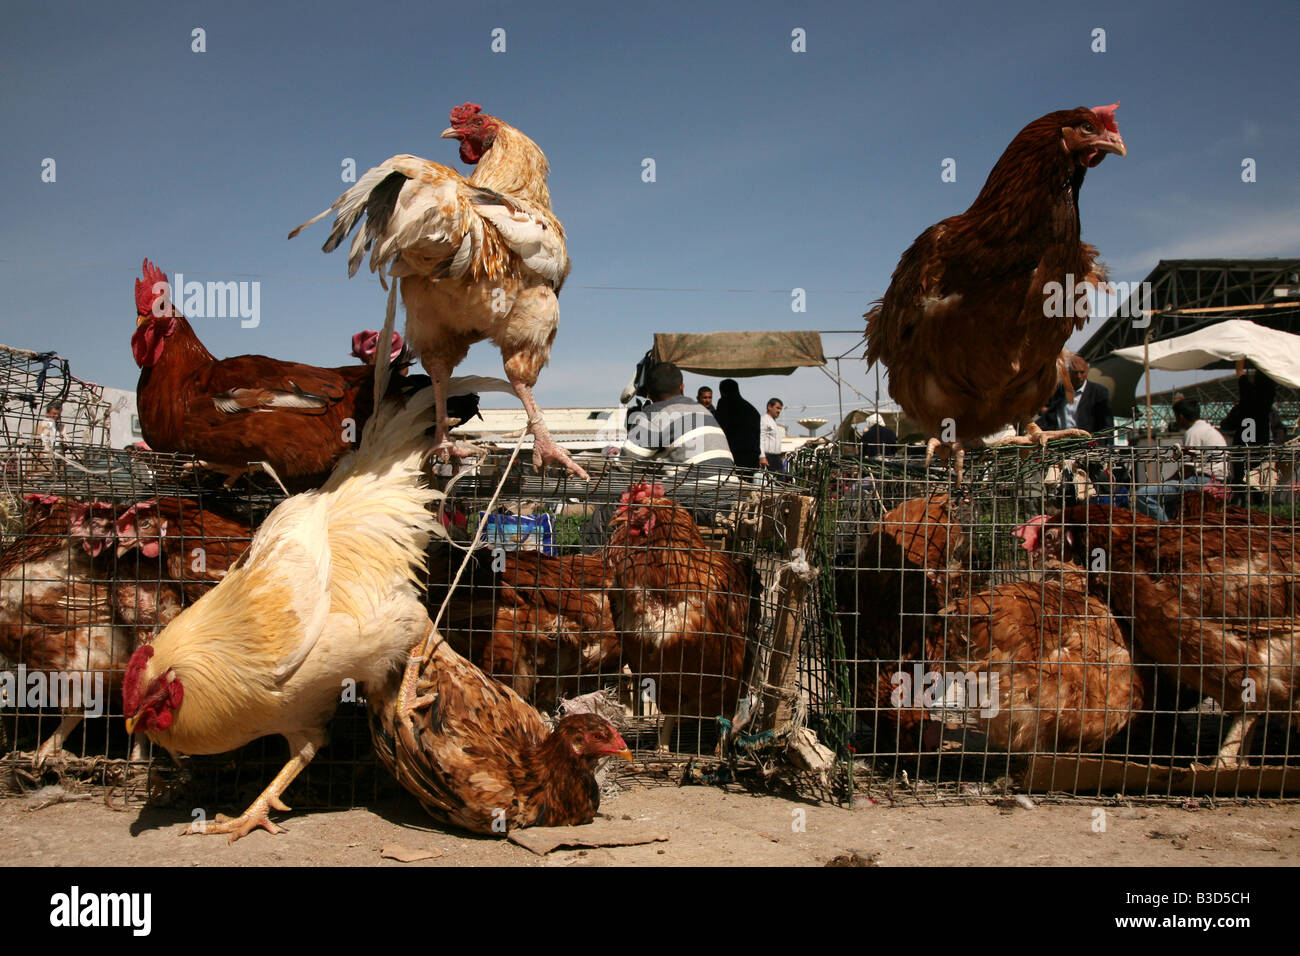 Poultry market in Urgench, Uzbekistan Stock Photo